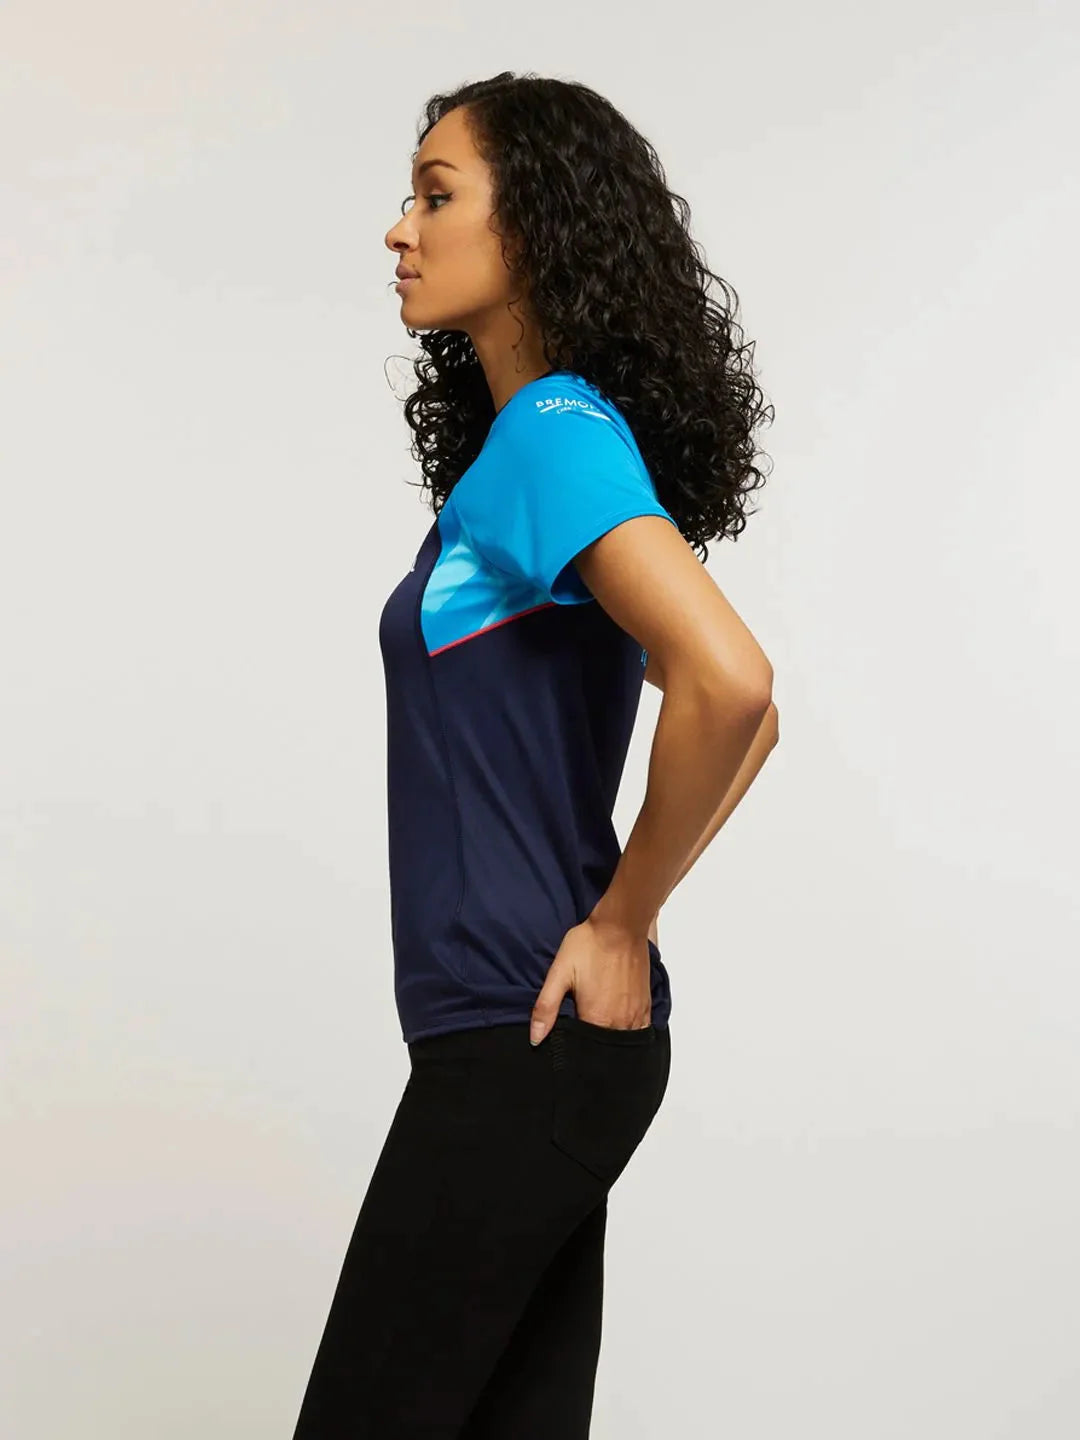 Williams Racing F1 2023 Women's Team Training Jersey T-Shirt-Blue